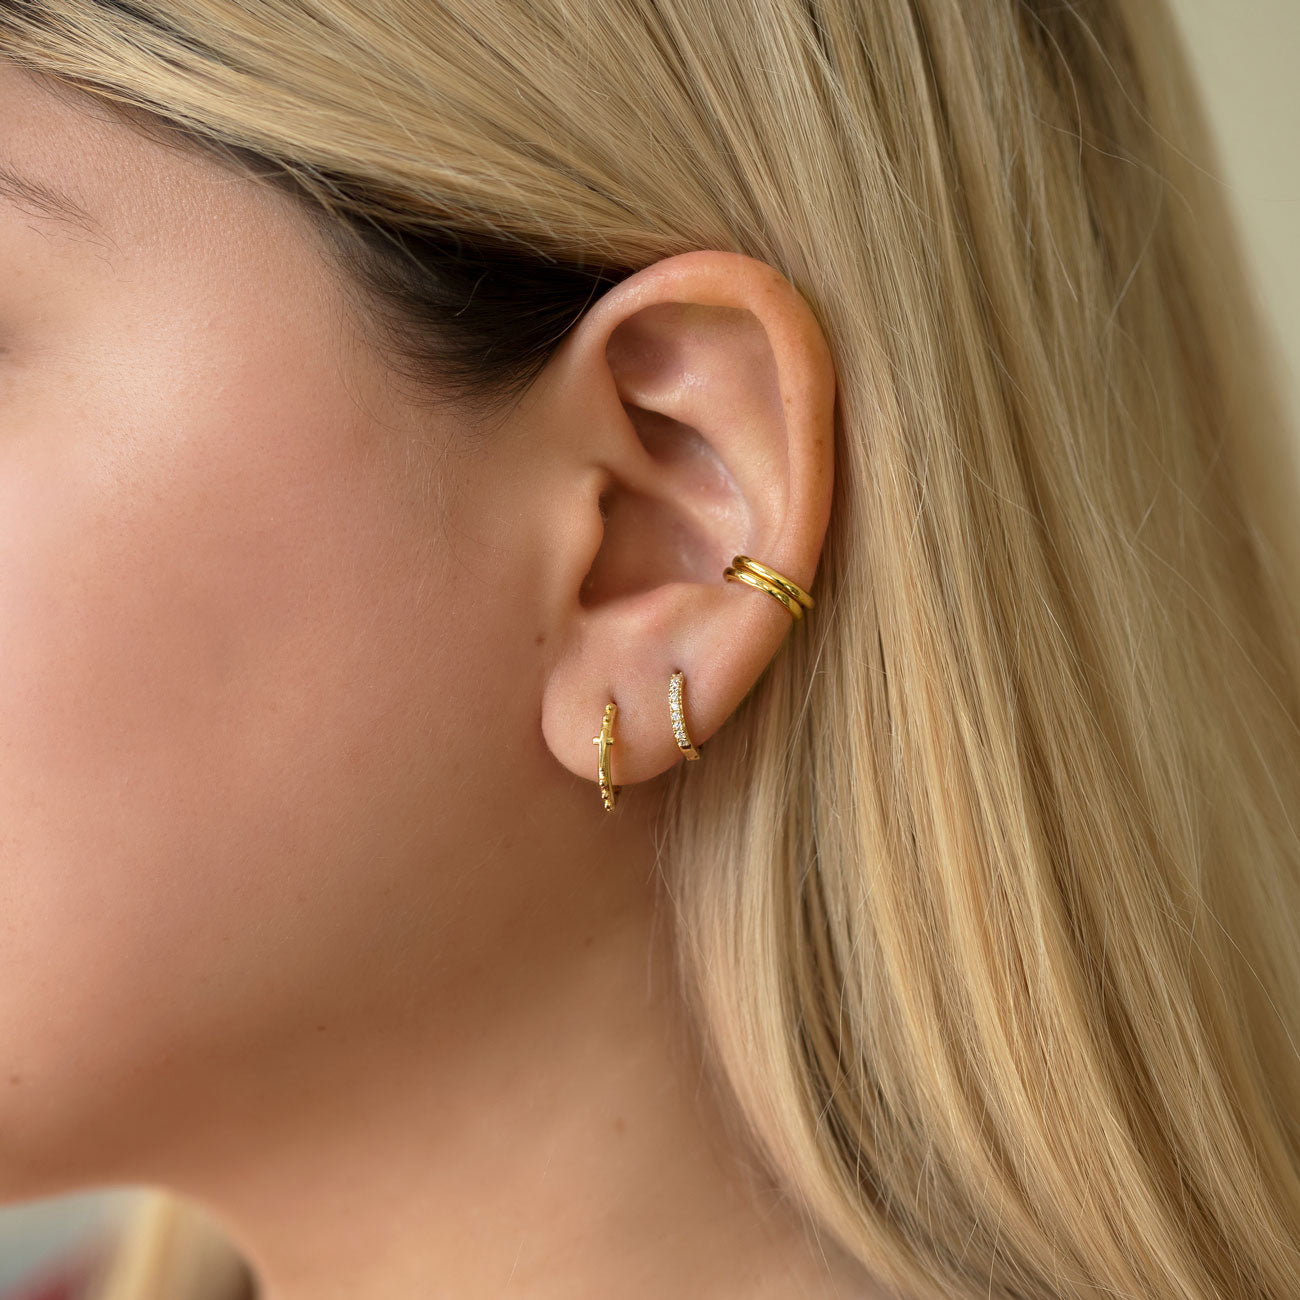  14k Gold Small Double Hoop Earrings for Single